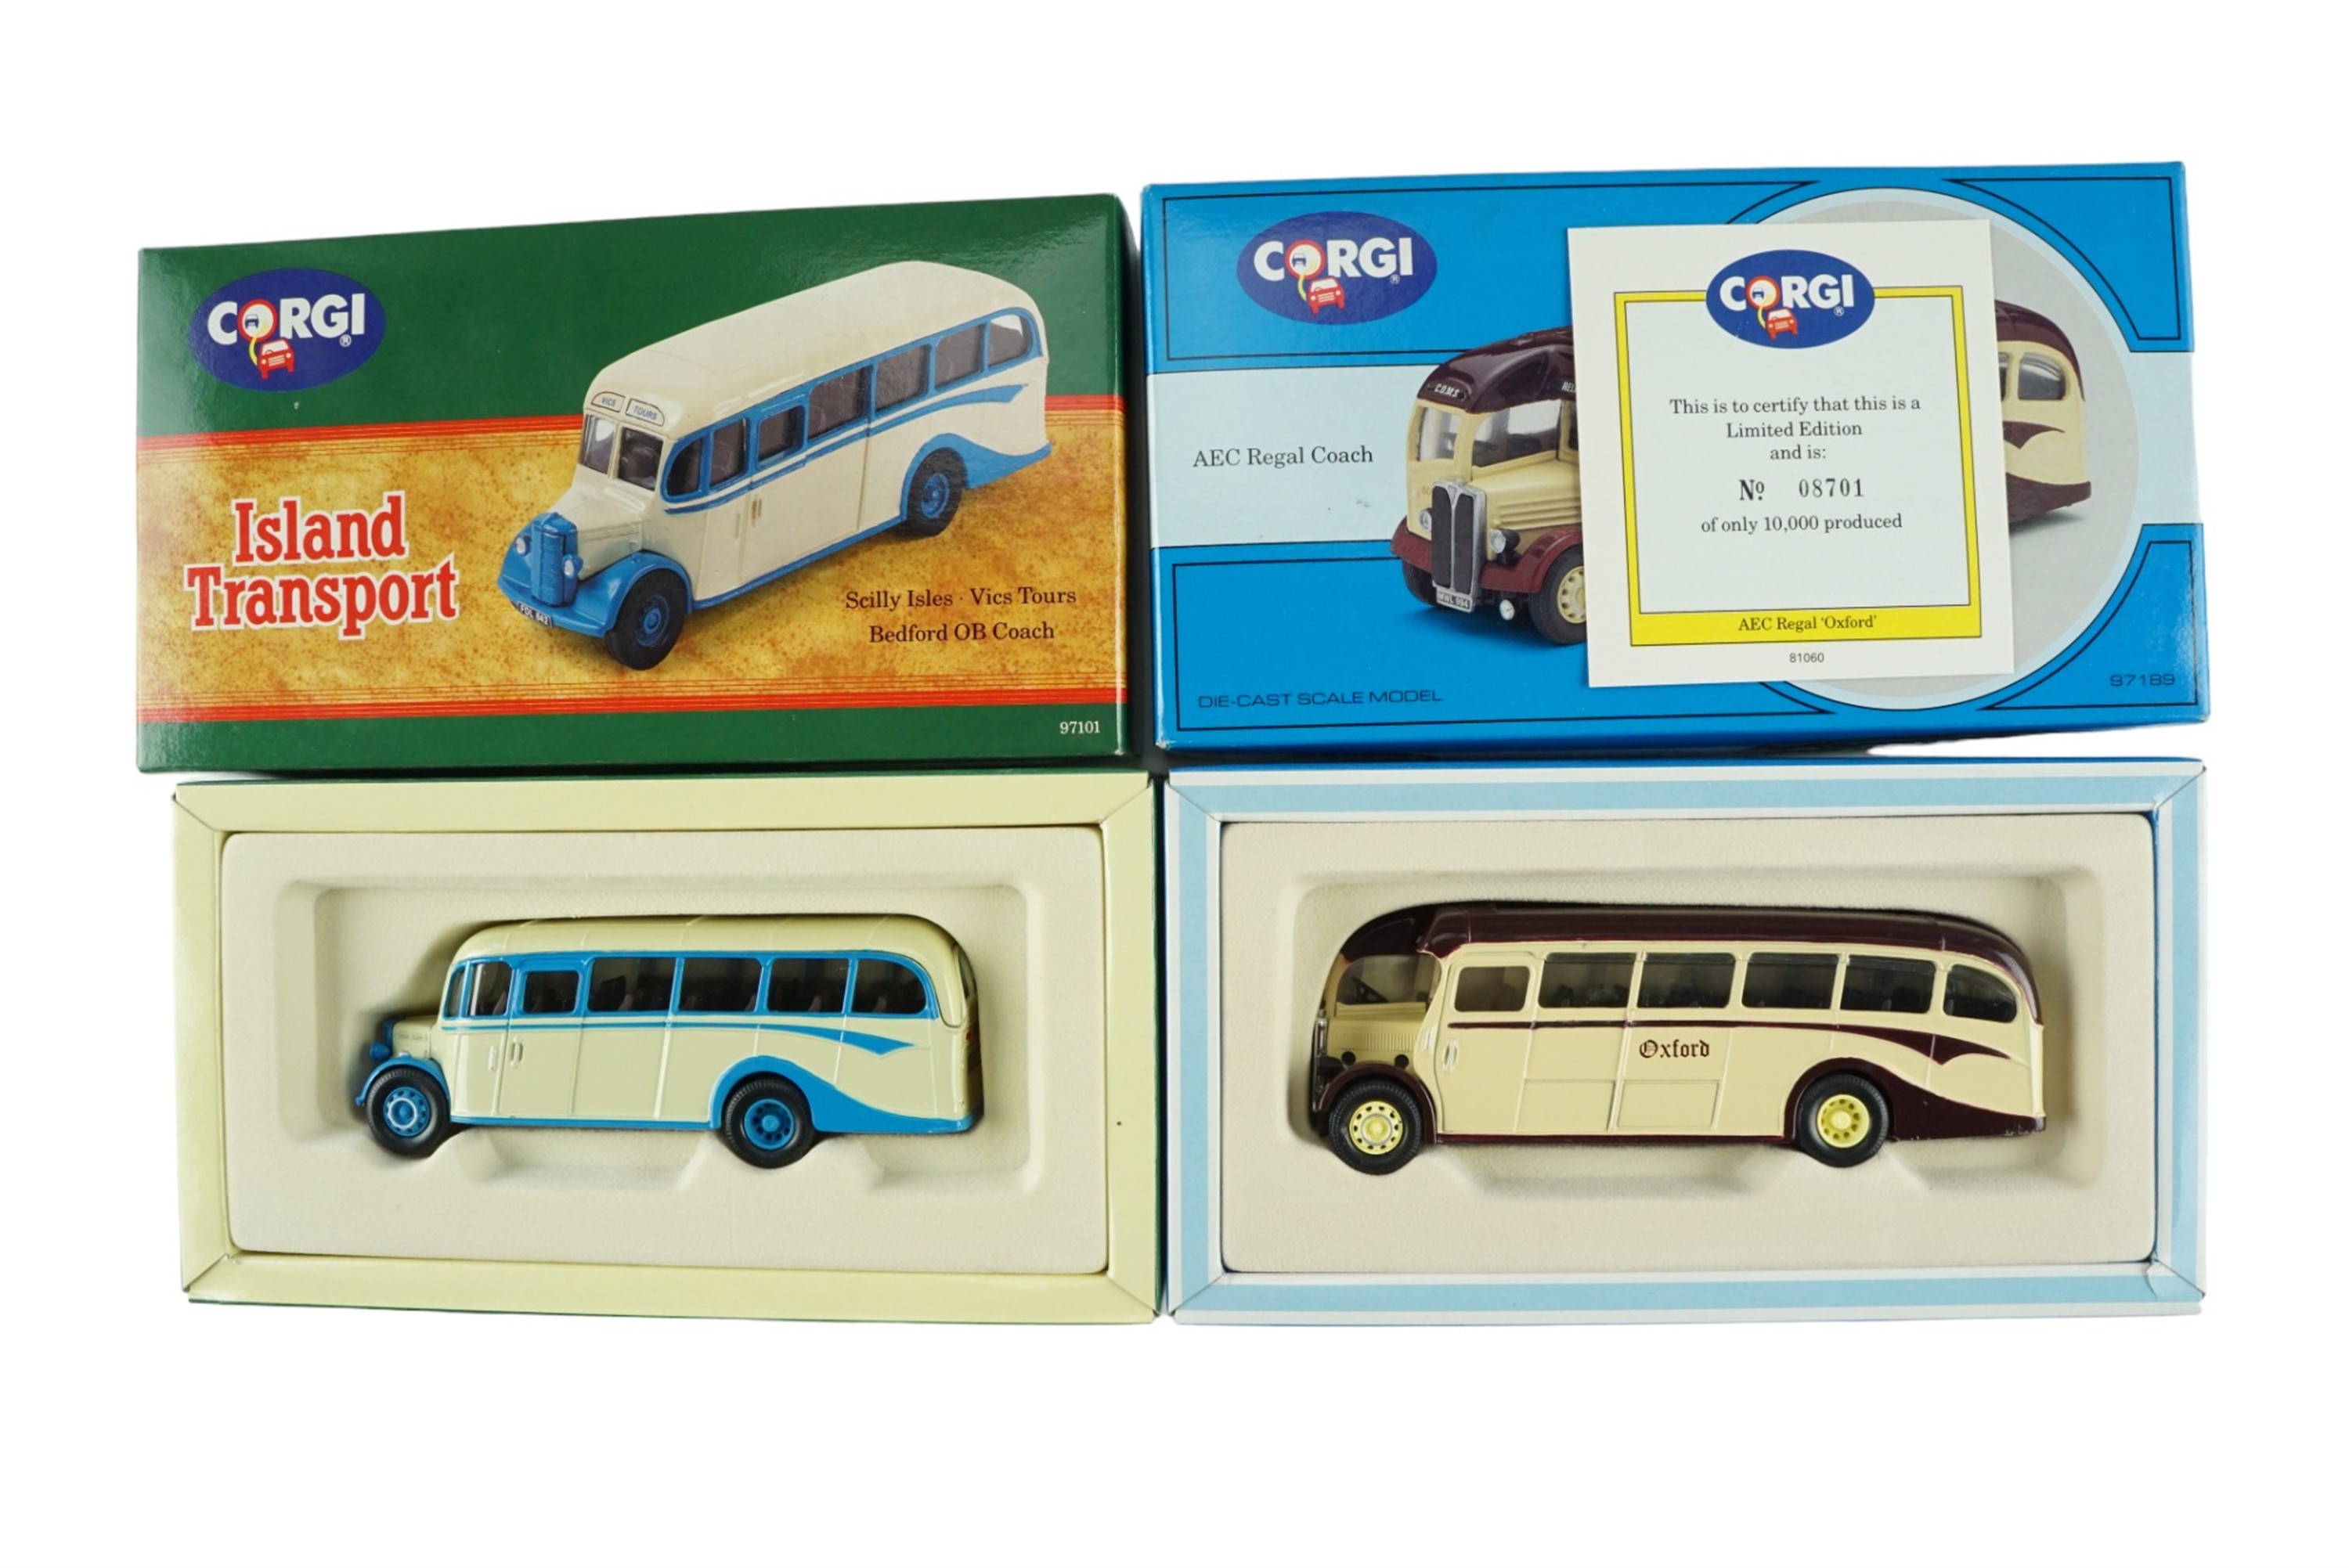 Five Corgi die-cast buses including Island Transport, AEC Regal coach, etc, boxed - Image 2 of 2